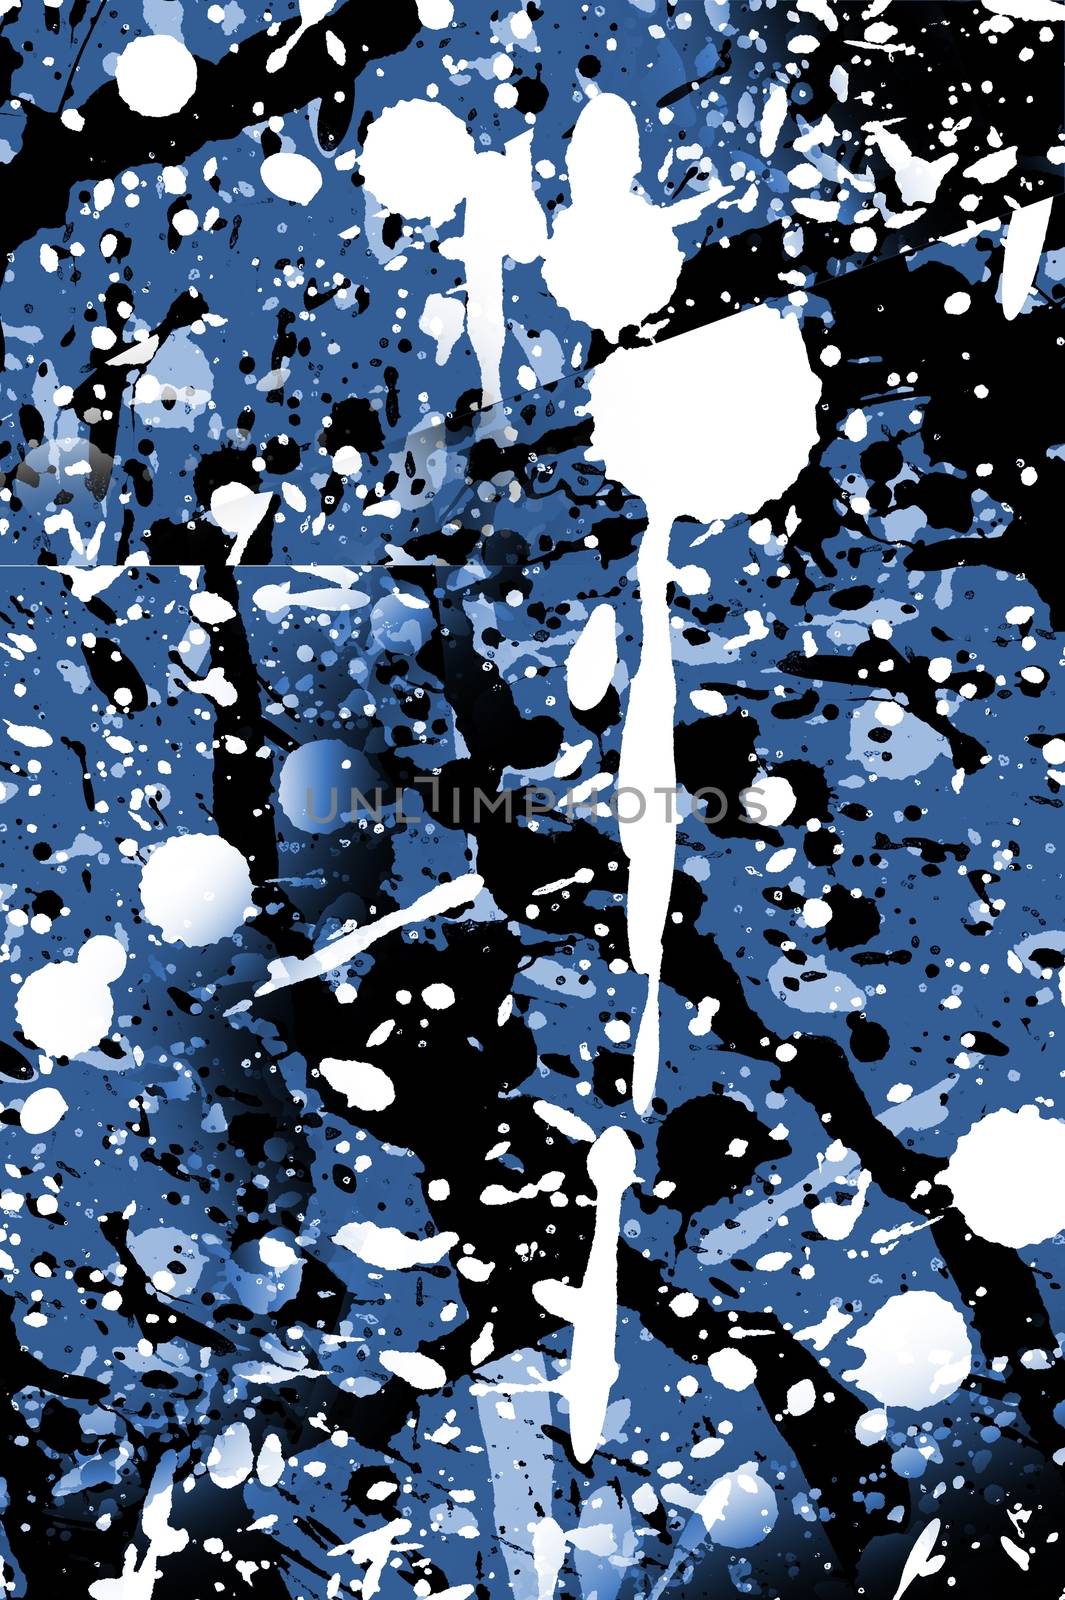 Grunge Splashes - Dirty Splashy Background. White, Blue and Black Splashes. Vertical Design.